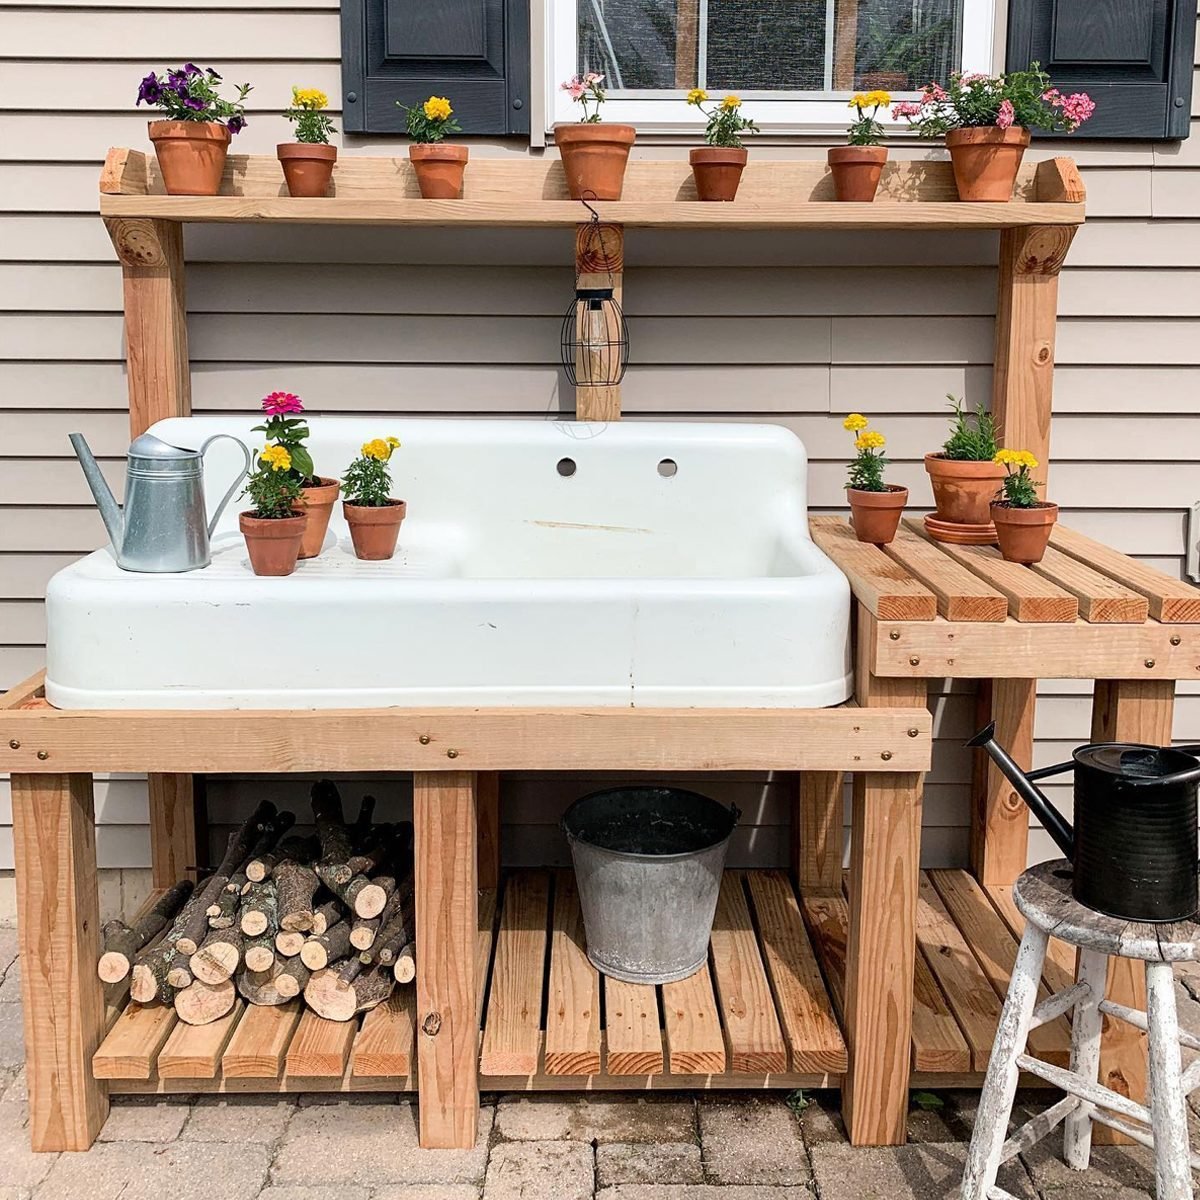 https://www.familyhandyman.com/wp-content/uploads/2023/02/Garden-Bench-Outdoor-Sink-courtesy-@whiterosefarmhouse-via-instagram.jpg